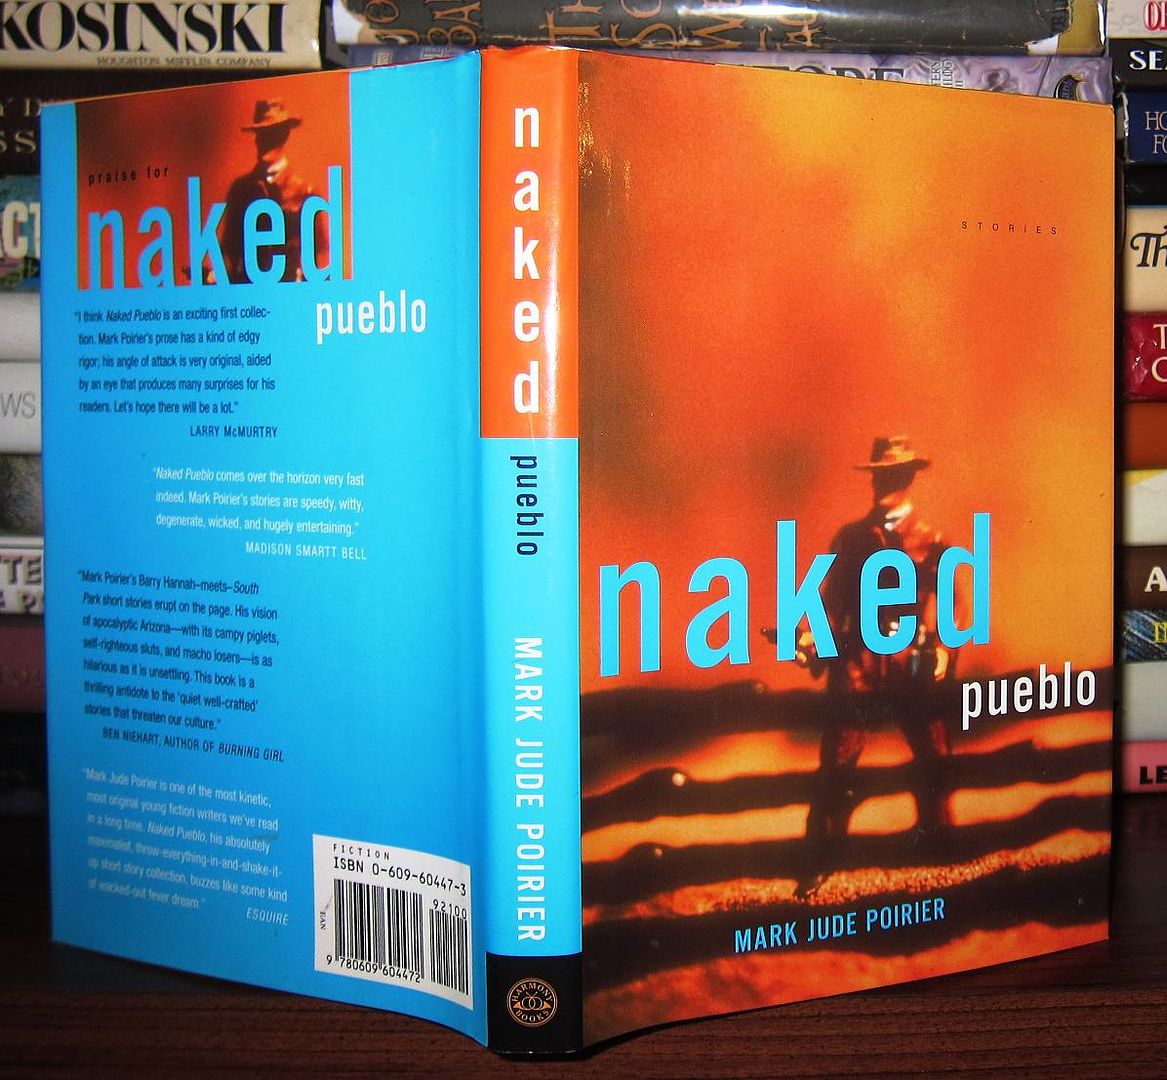 POIRIER, MARK JUDE - Naked Pueblo